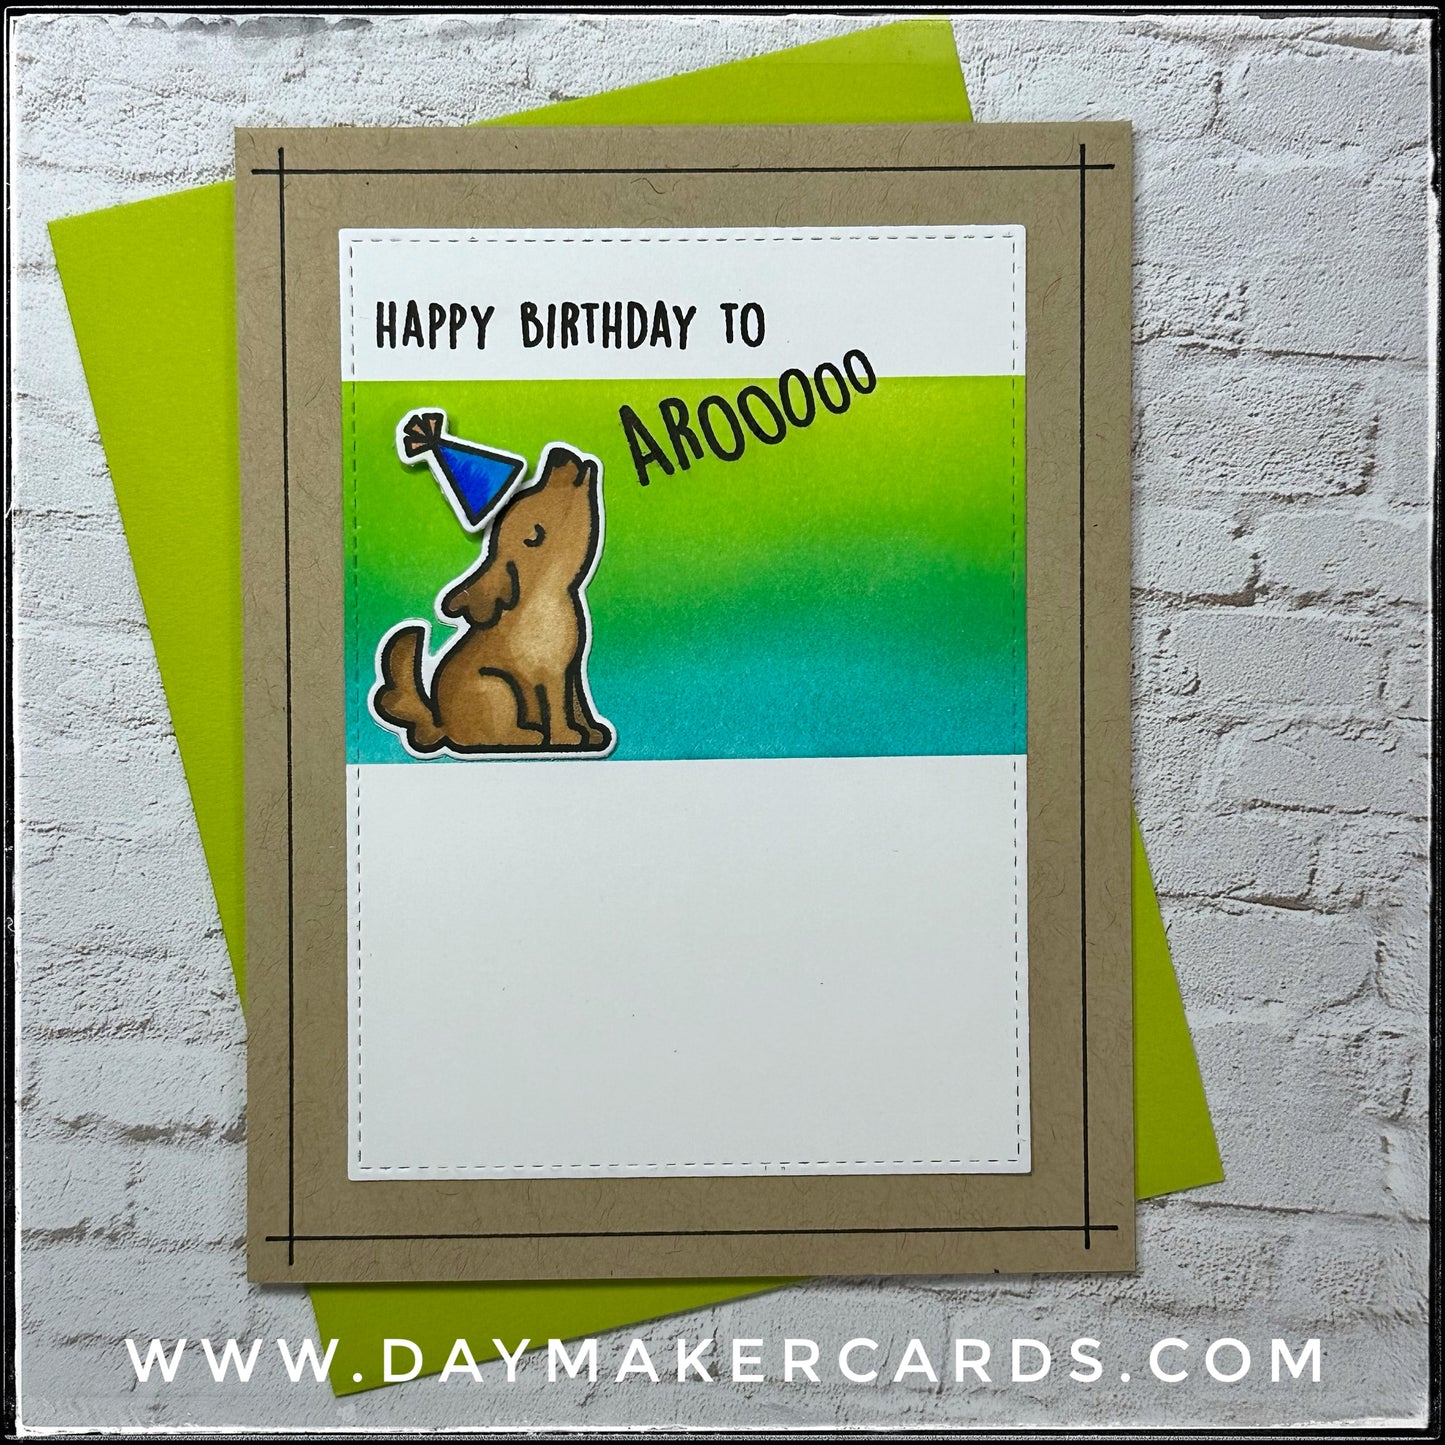 Happy Birthday To AROOOOO Handmade Card